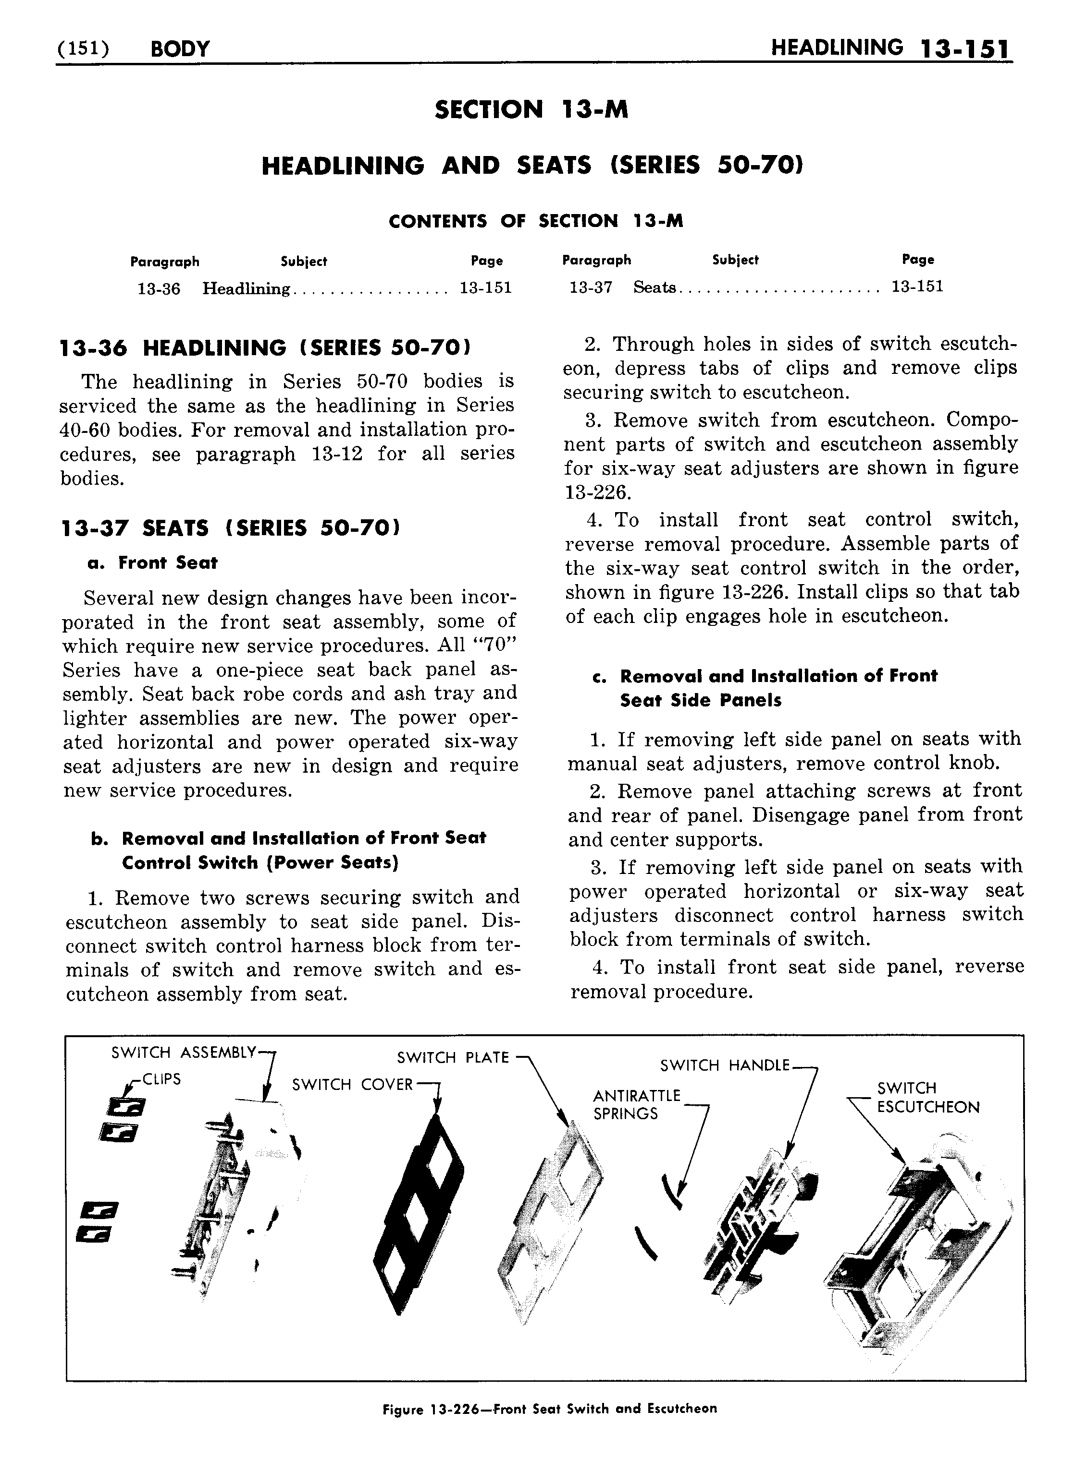 n_1957 Buick Body Service Manual-153-153.jpg